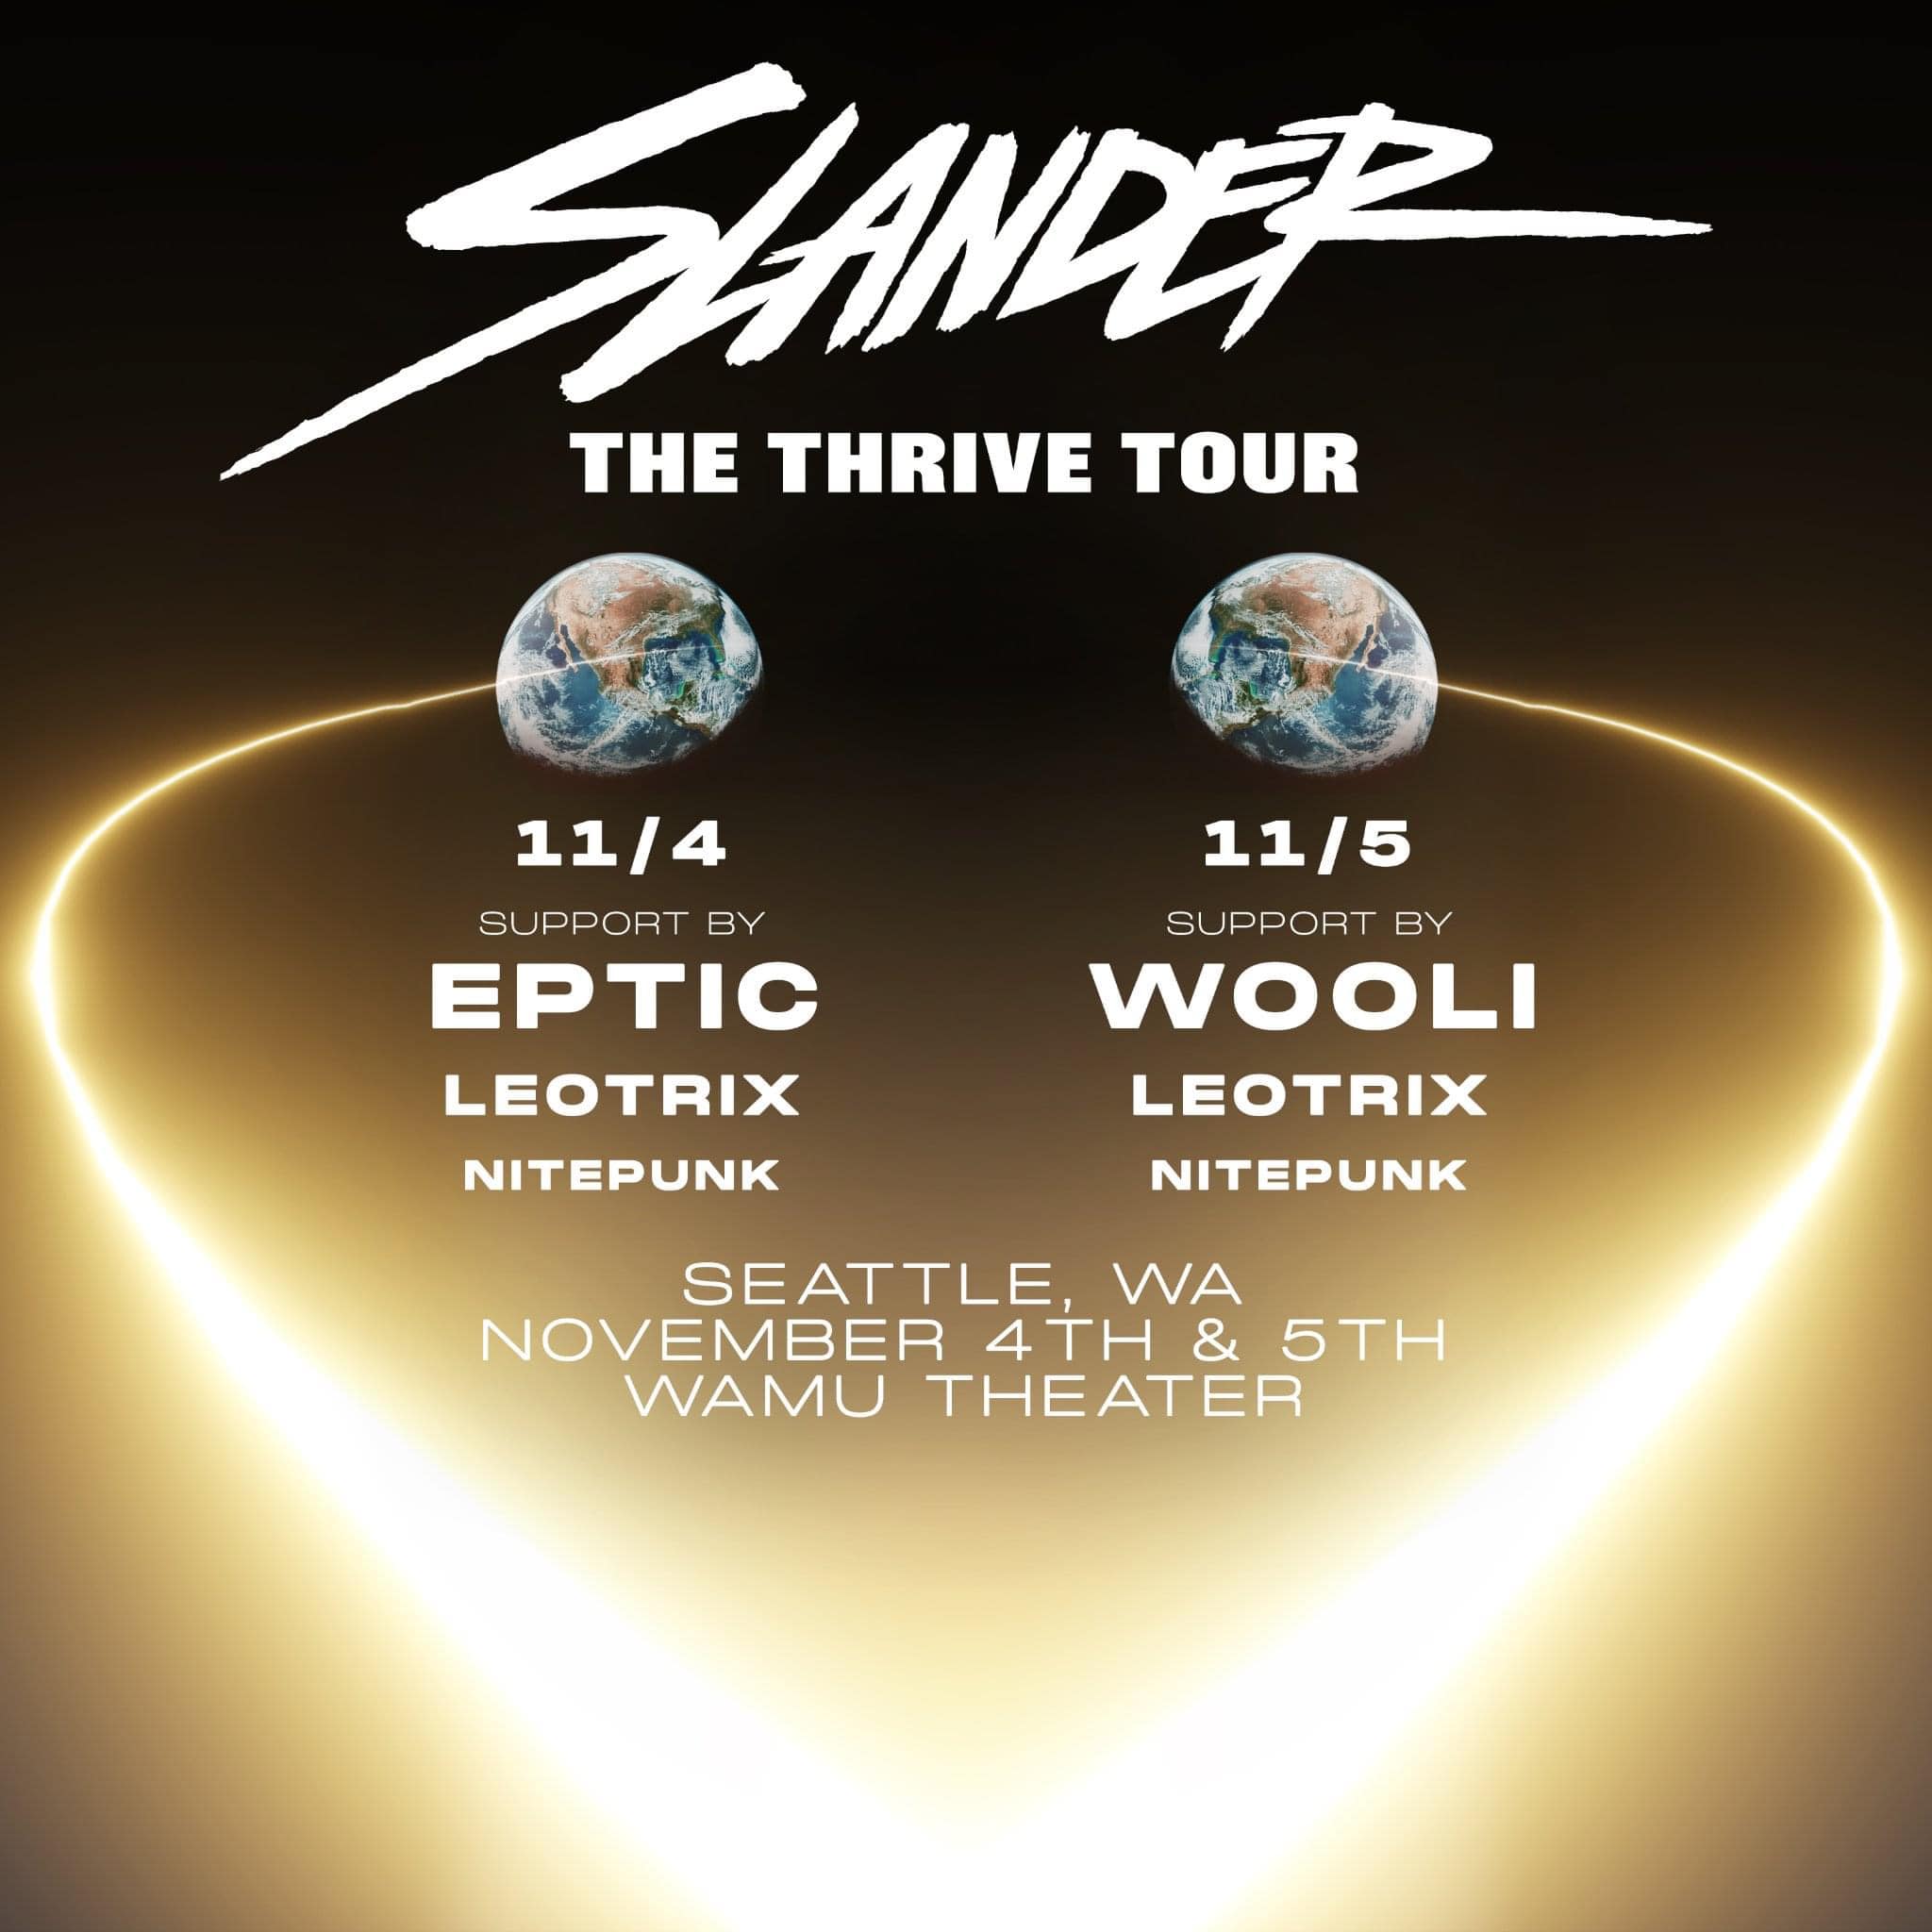 Slander: Thrive Tour